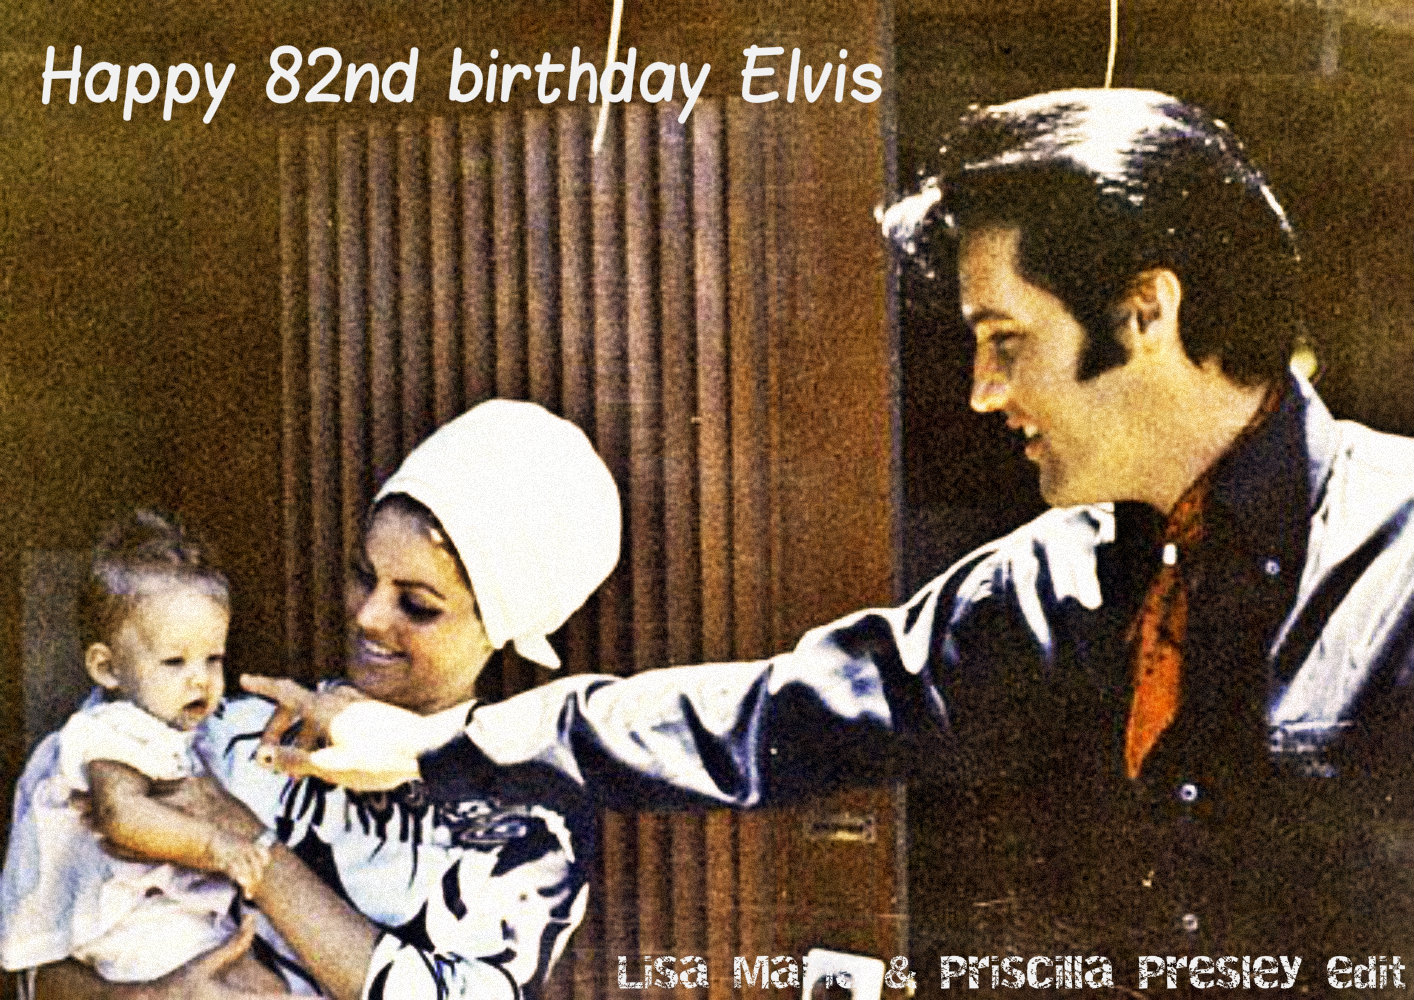 Happy 82nd birthday Elvis